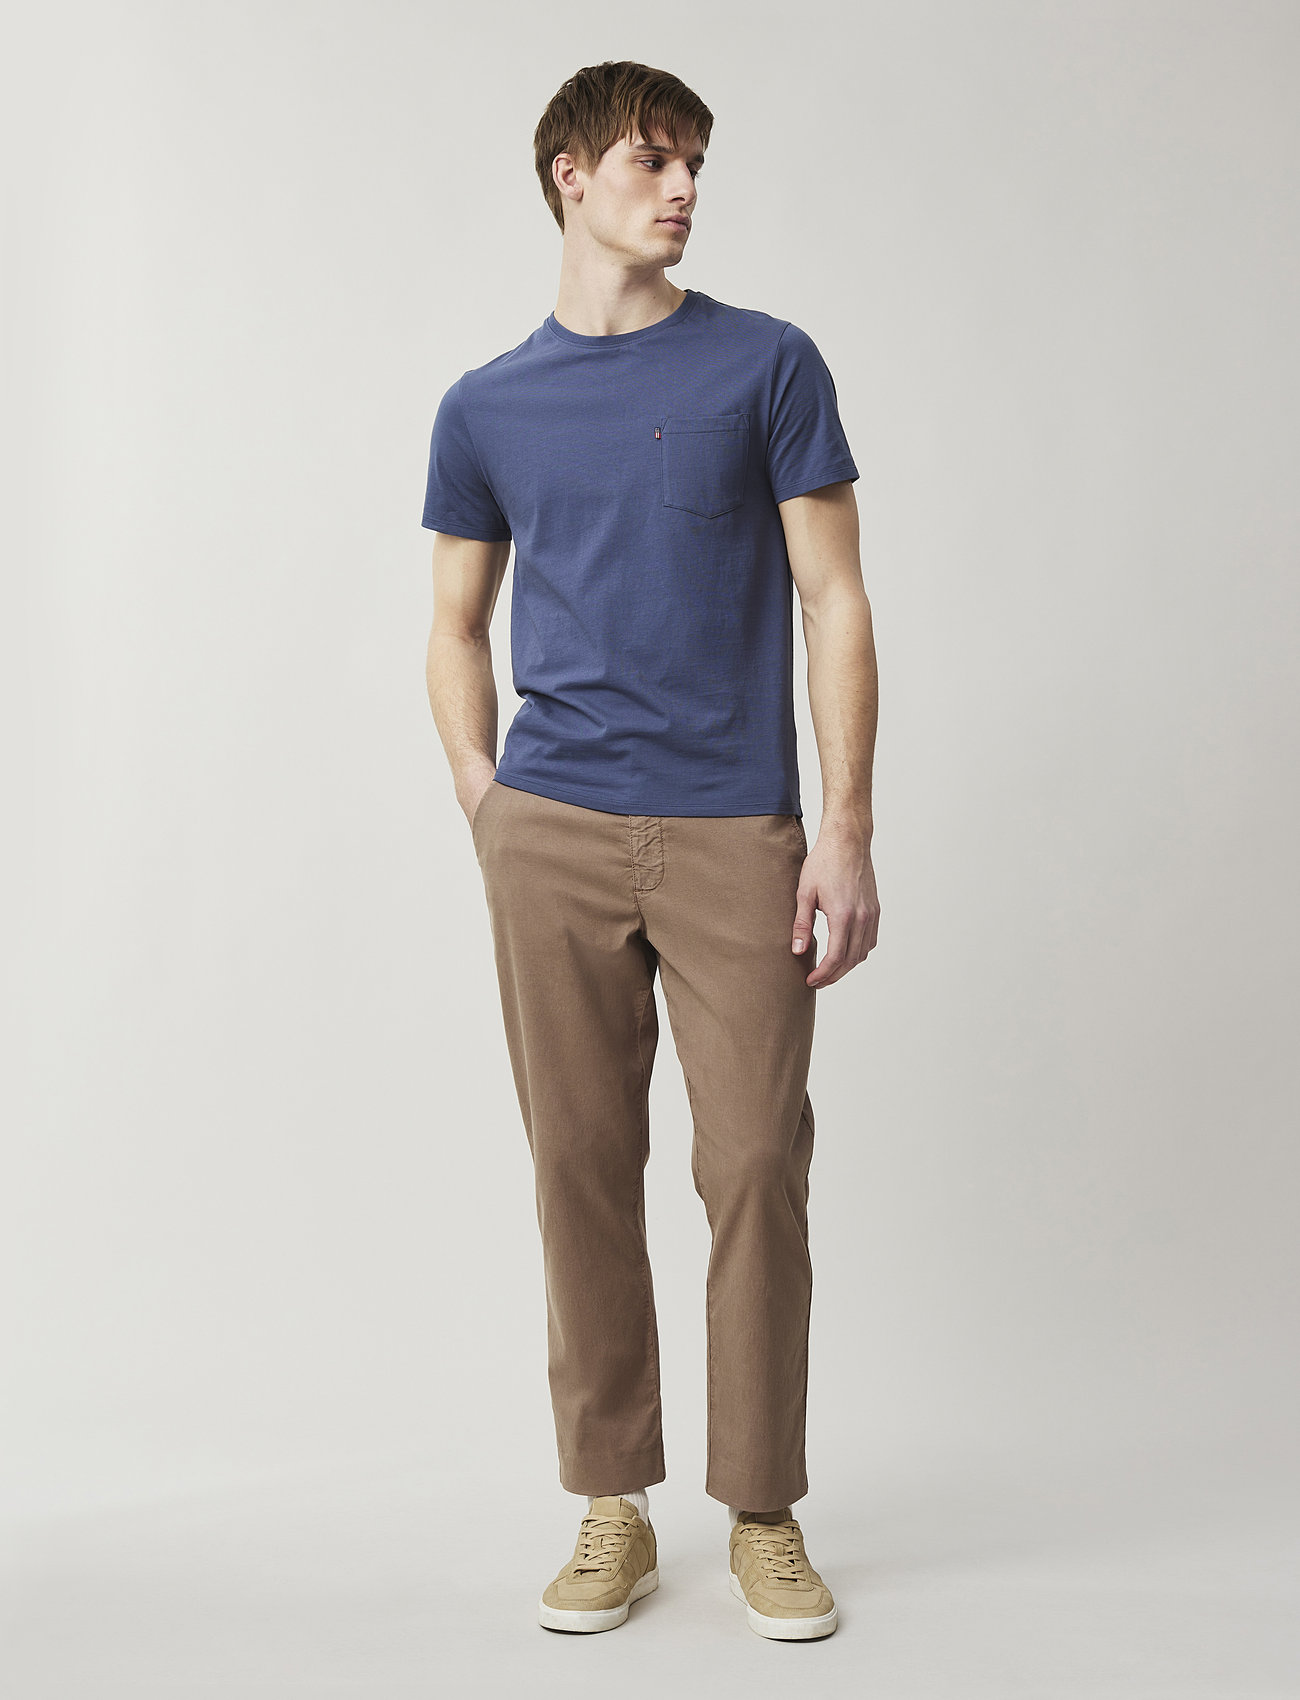 Lexington Clothing - Travis Tee - kortermede t-skjorter - medium blue - 0